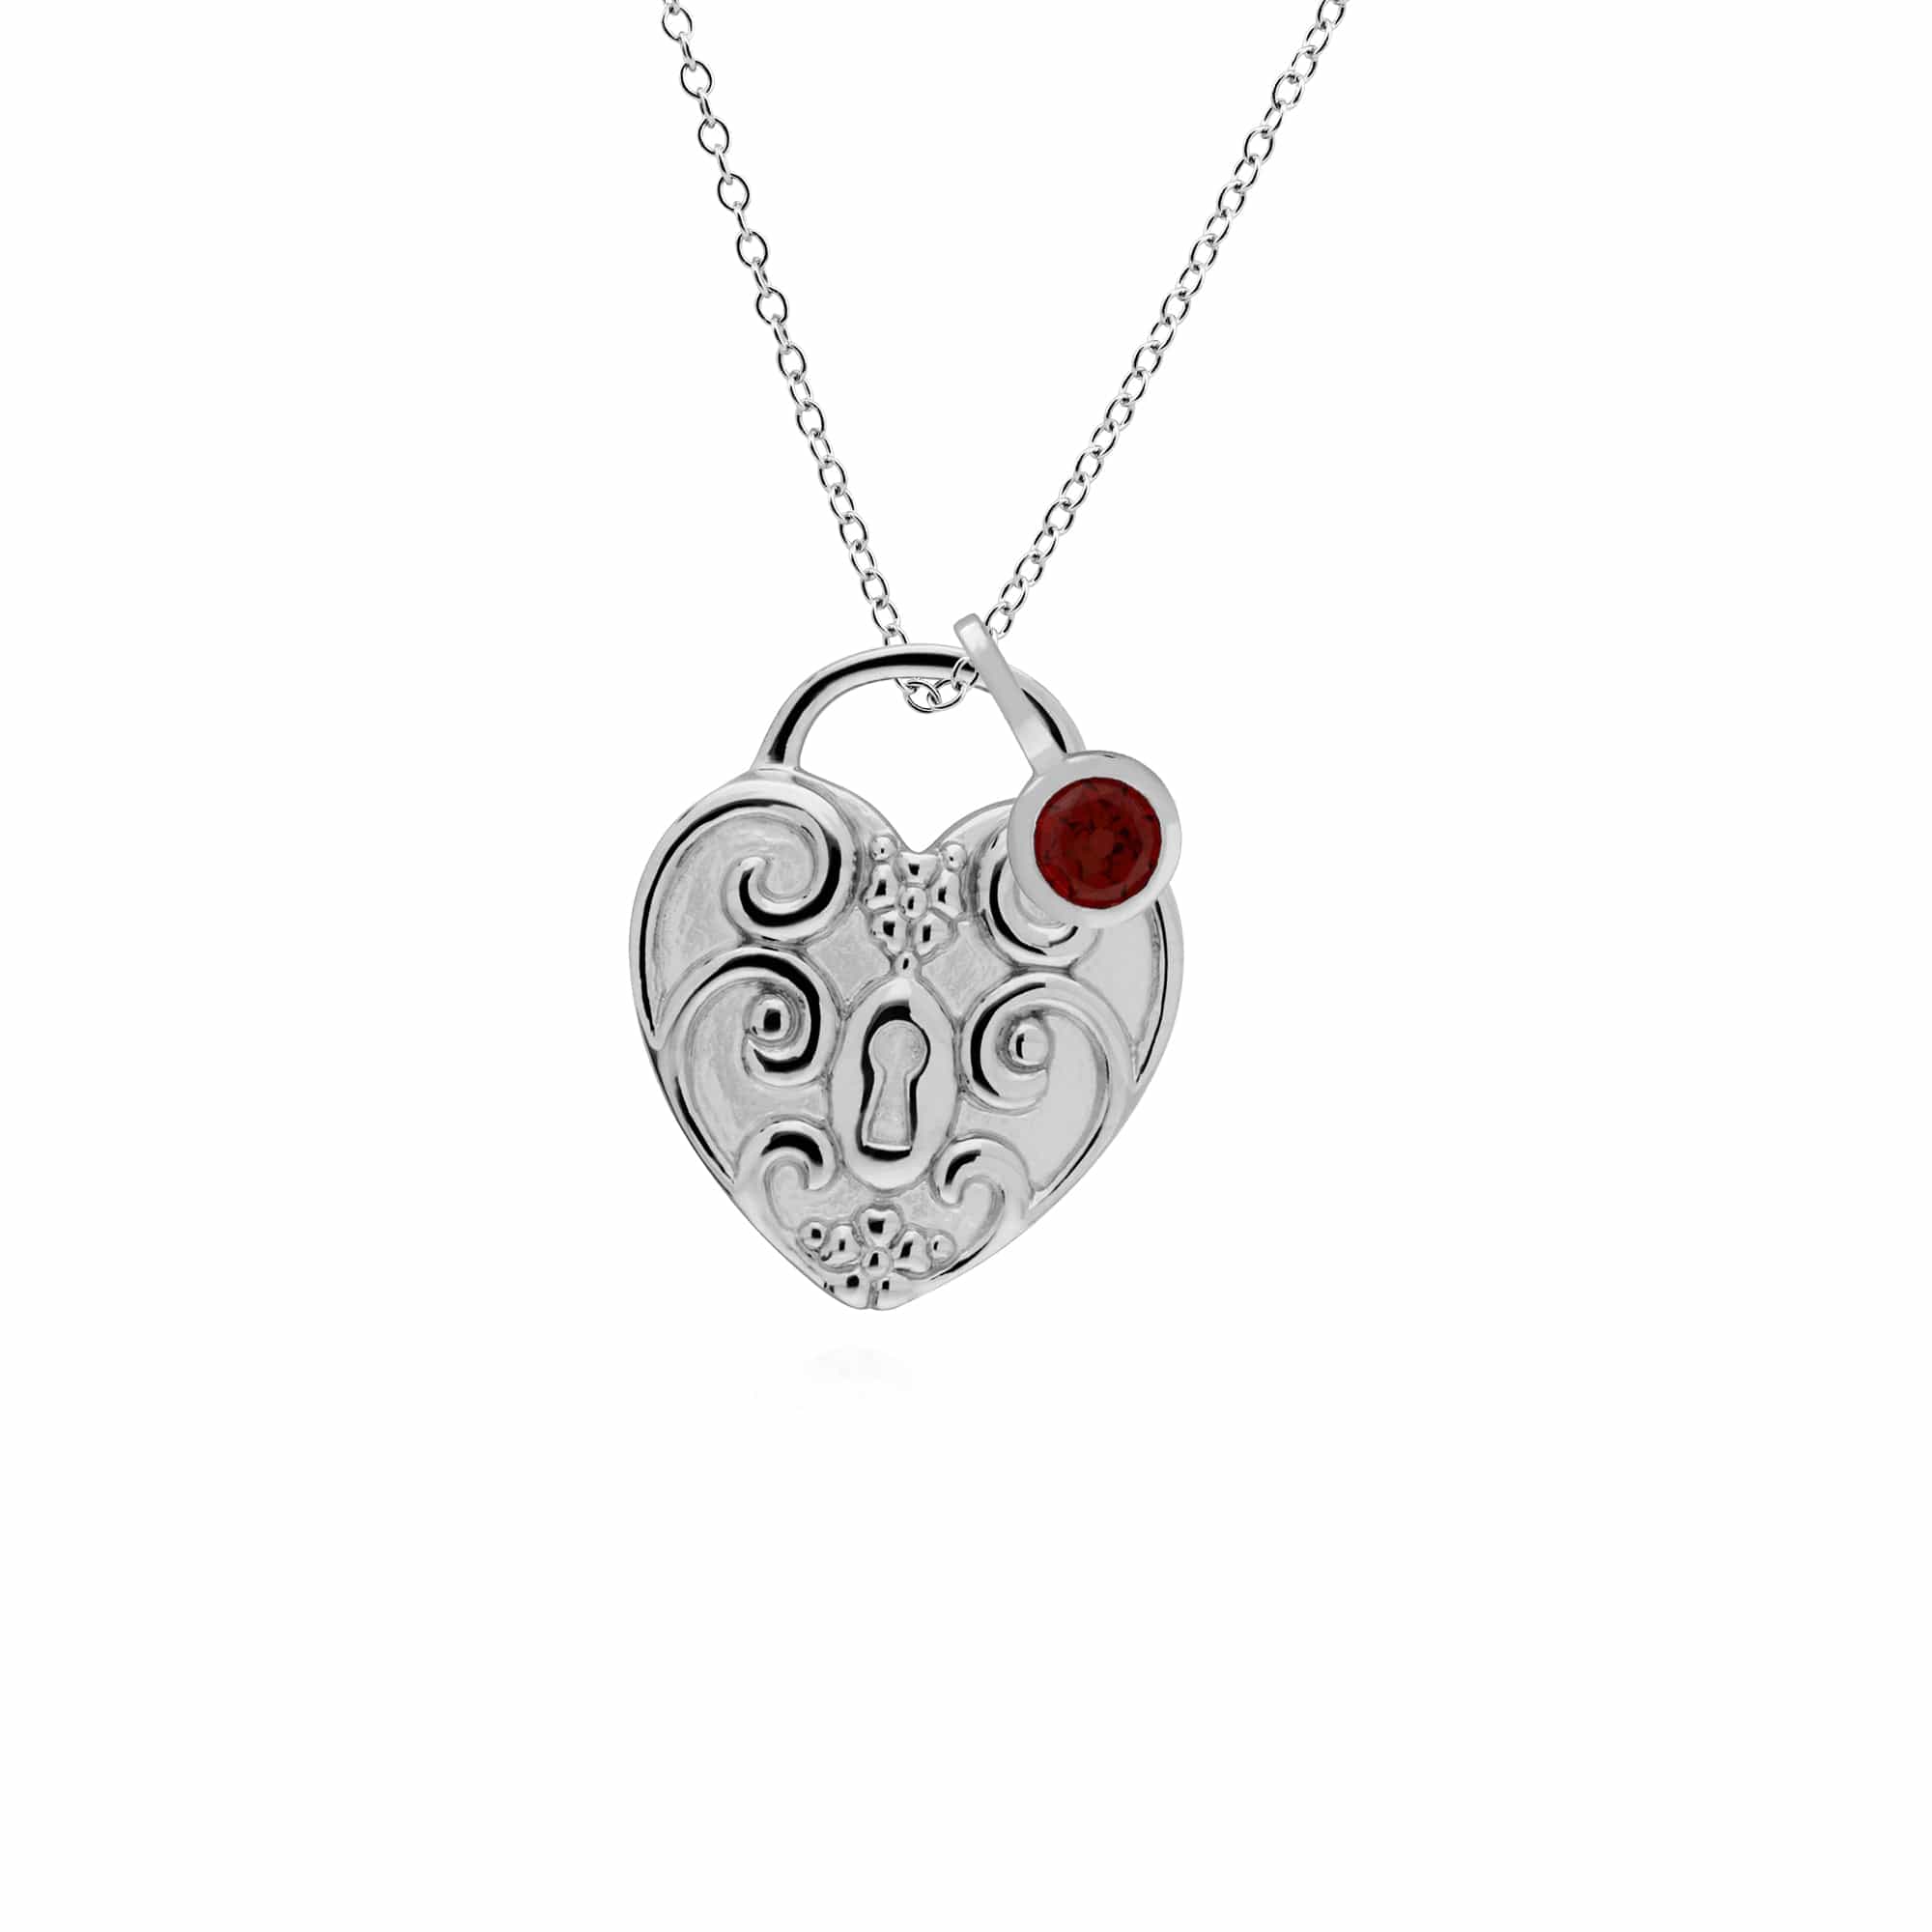 270P027604925-270P026601925 Classic Swirl Heart Lock Pendant & Garnet Charm in 925 Sterling Silver 1